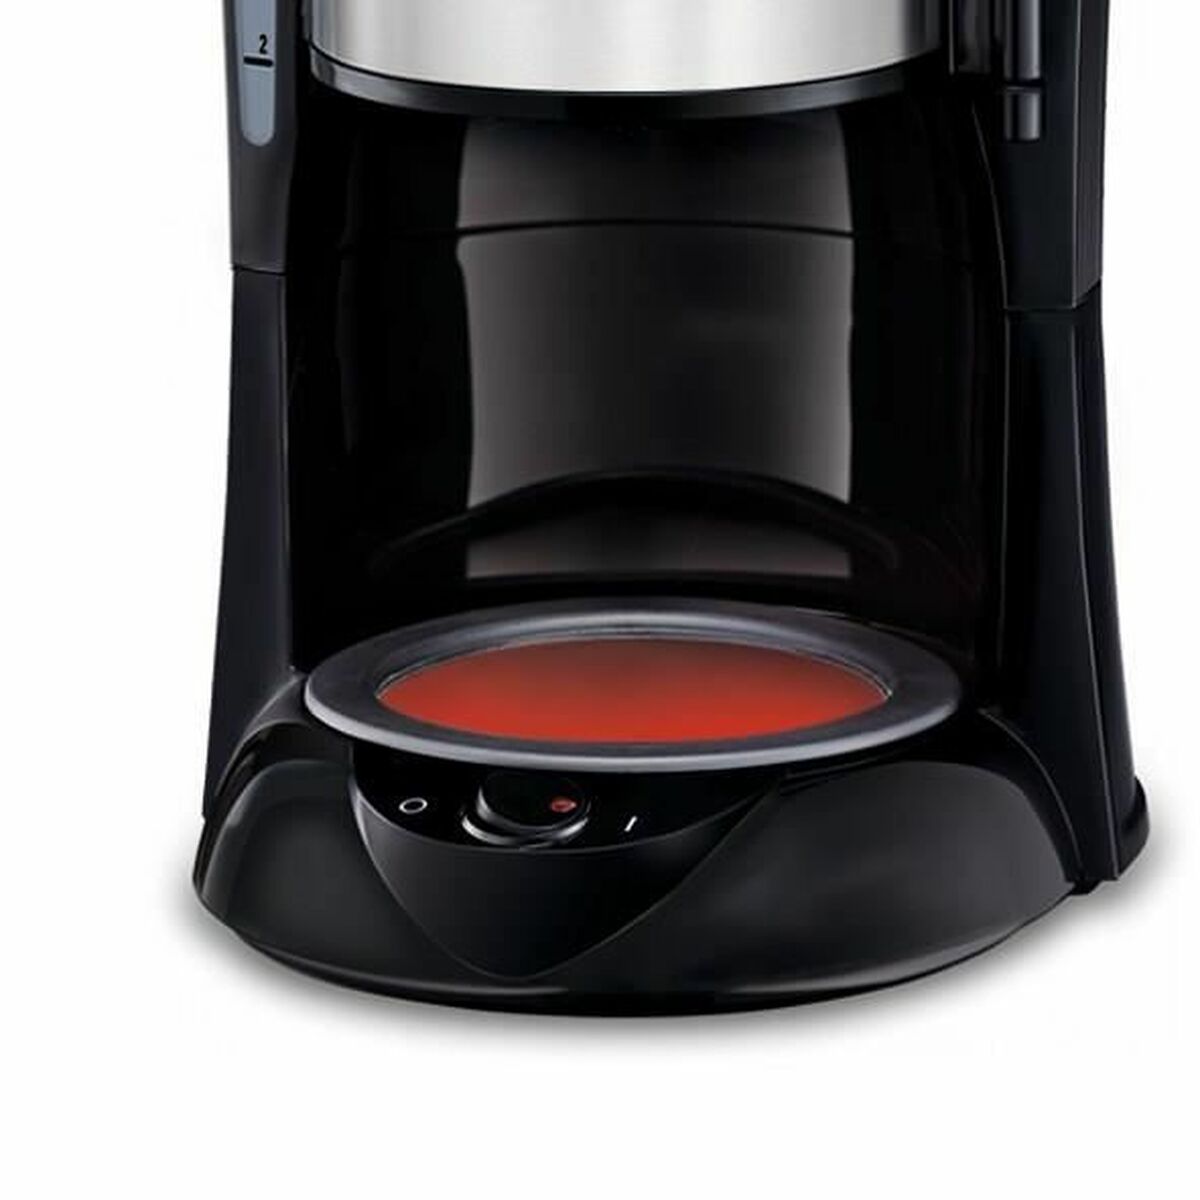 Filterkaffeemaschine Moulinex FG150813 0,6 L 650W Schwarz 600 W 600 ml - CA International 